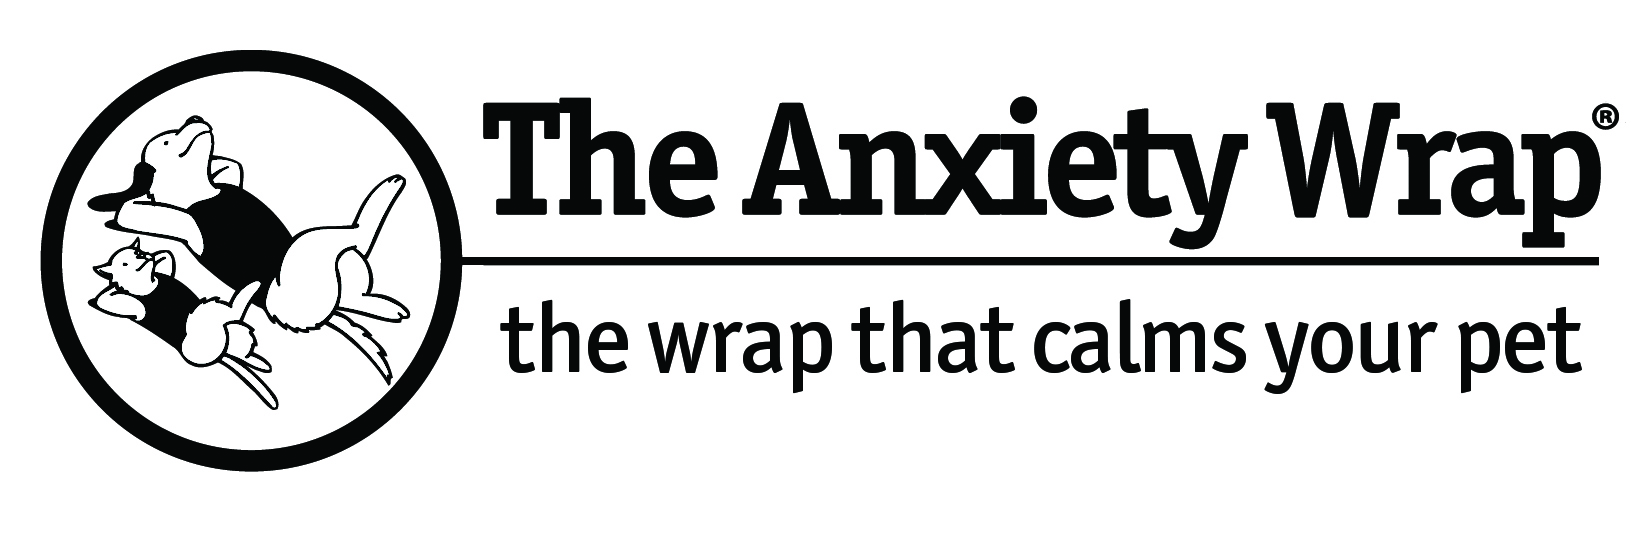 Anxiety Wrap